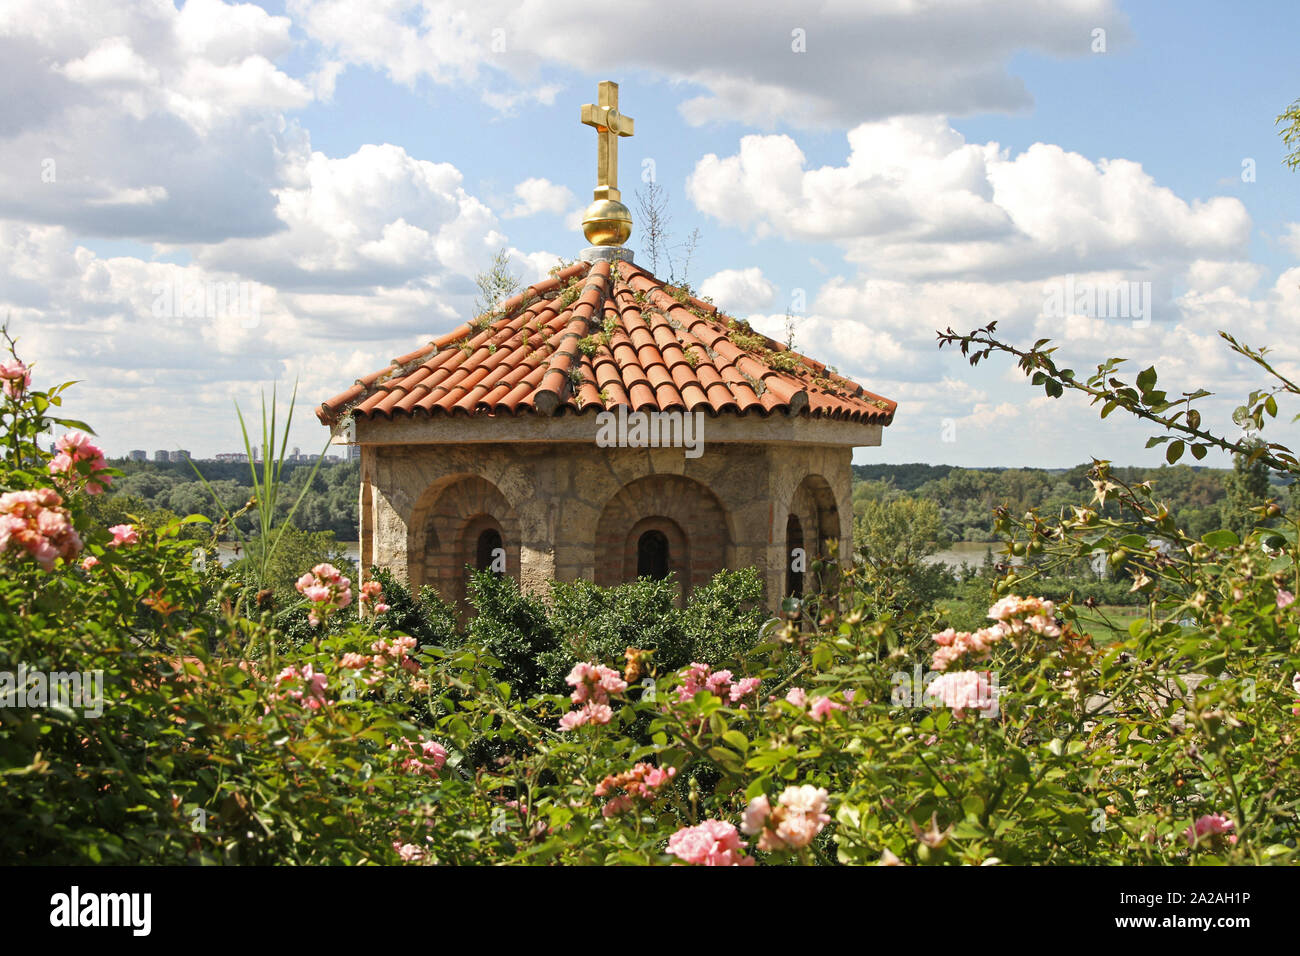 Ruzitsa (die Kleine Rose) Hl. Petka Kirche Turm, die Festung Kalemegdan, Kalemegdan Park, Belgrad, Serbien. Stockfoto